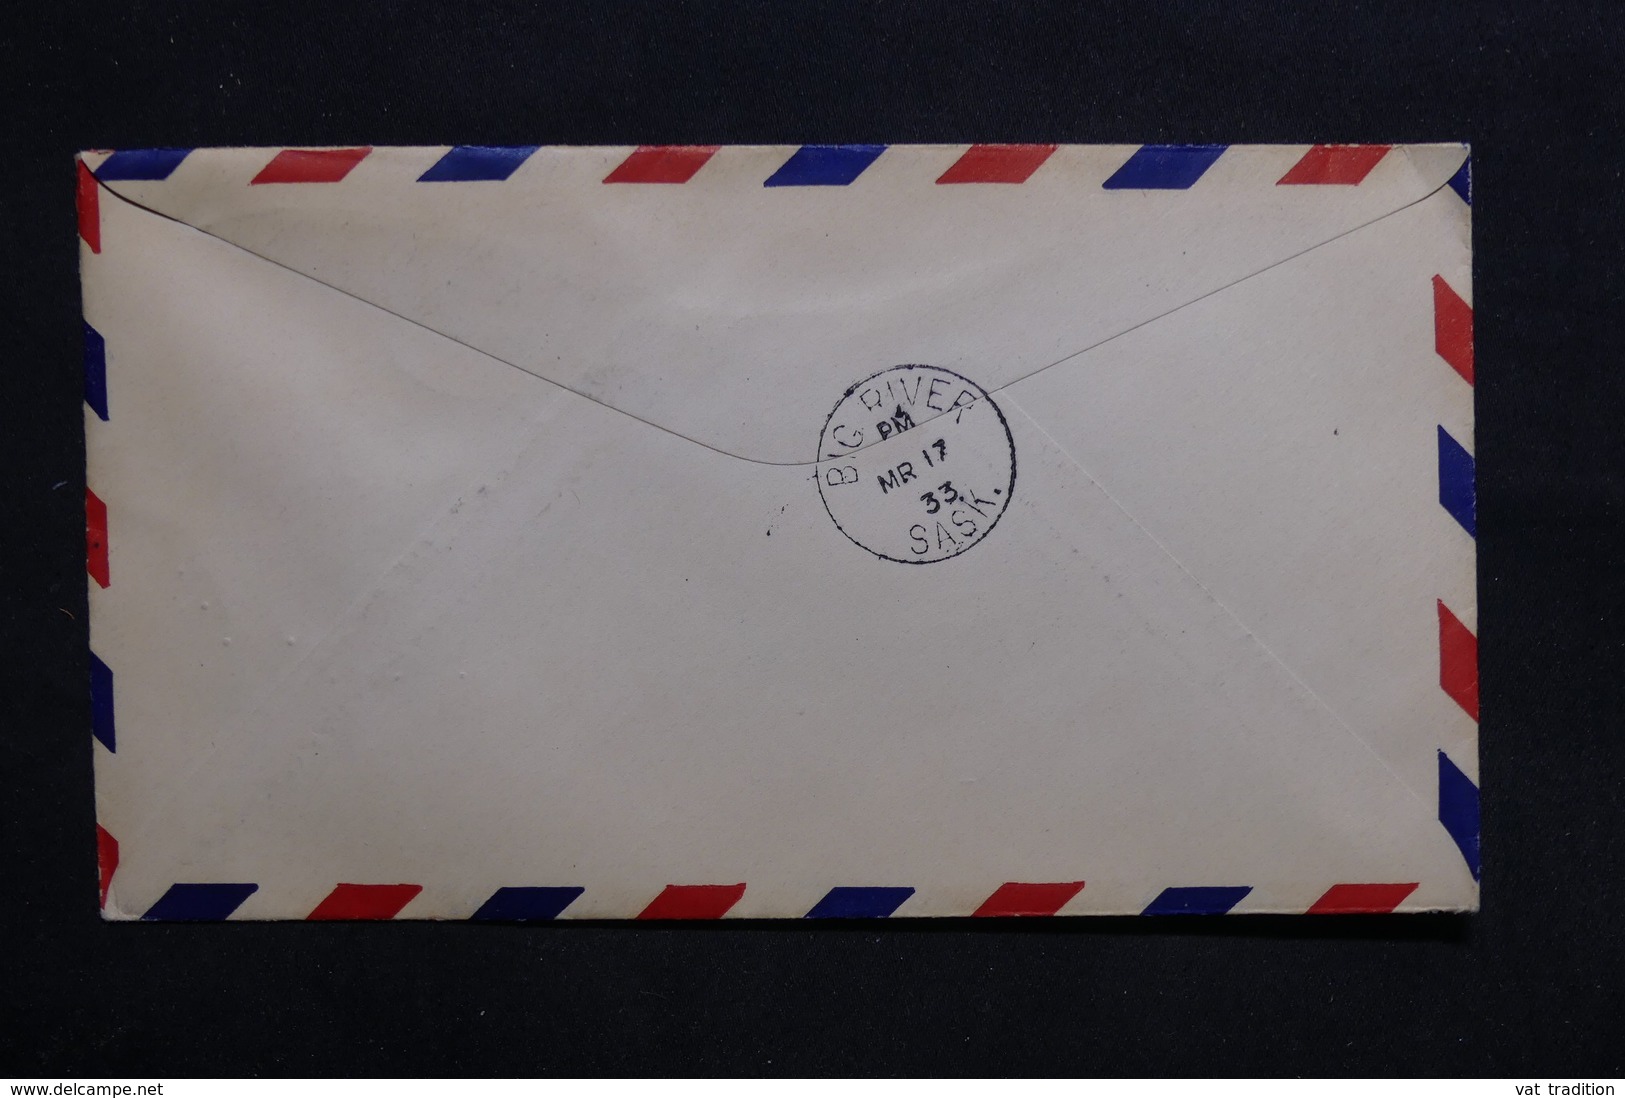 CANADA - Enveloppe 1 Er Vol Ile à La Crosse / Big River En 1933 - L 32802 - Briefe U. Dokumente